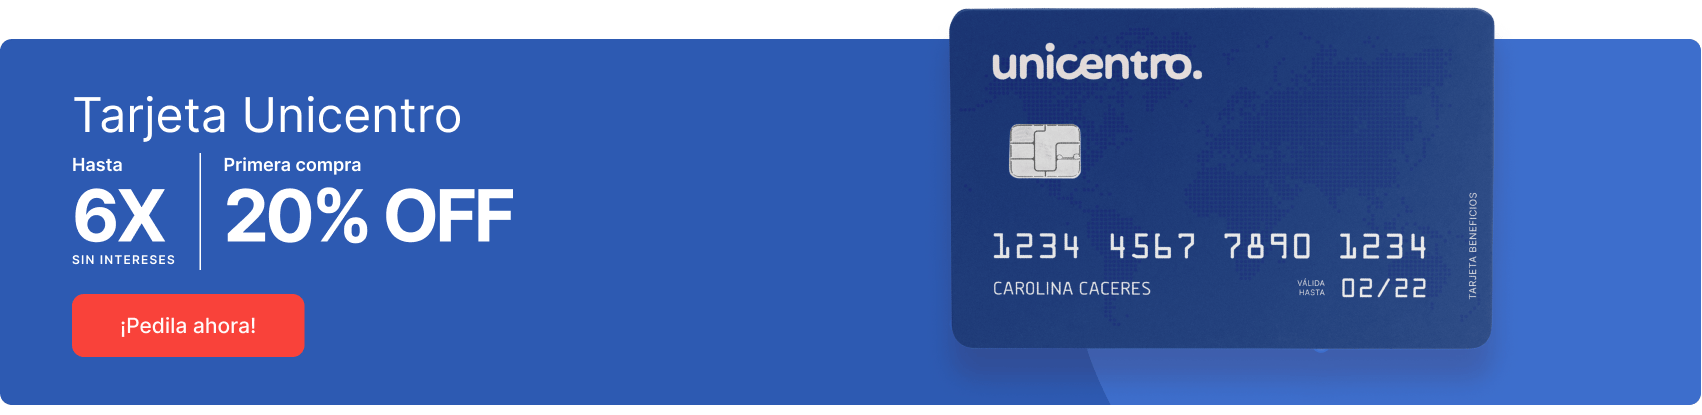 banner de promoción de tarjeta unicentro